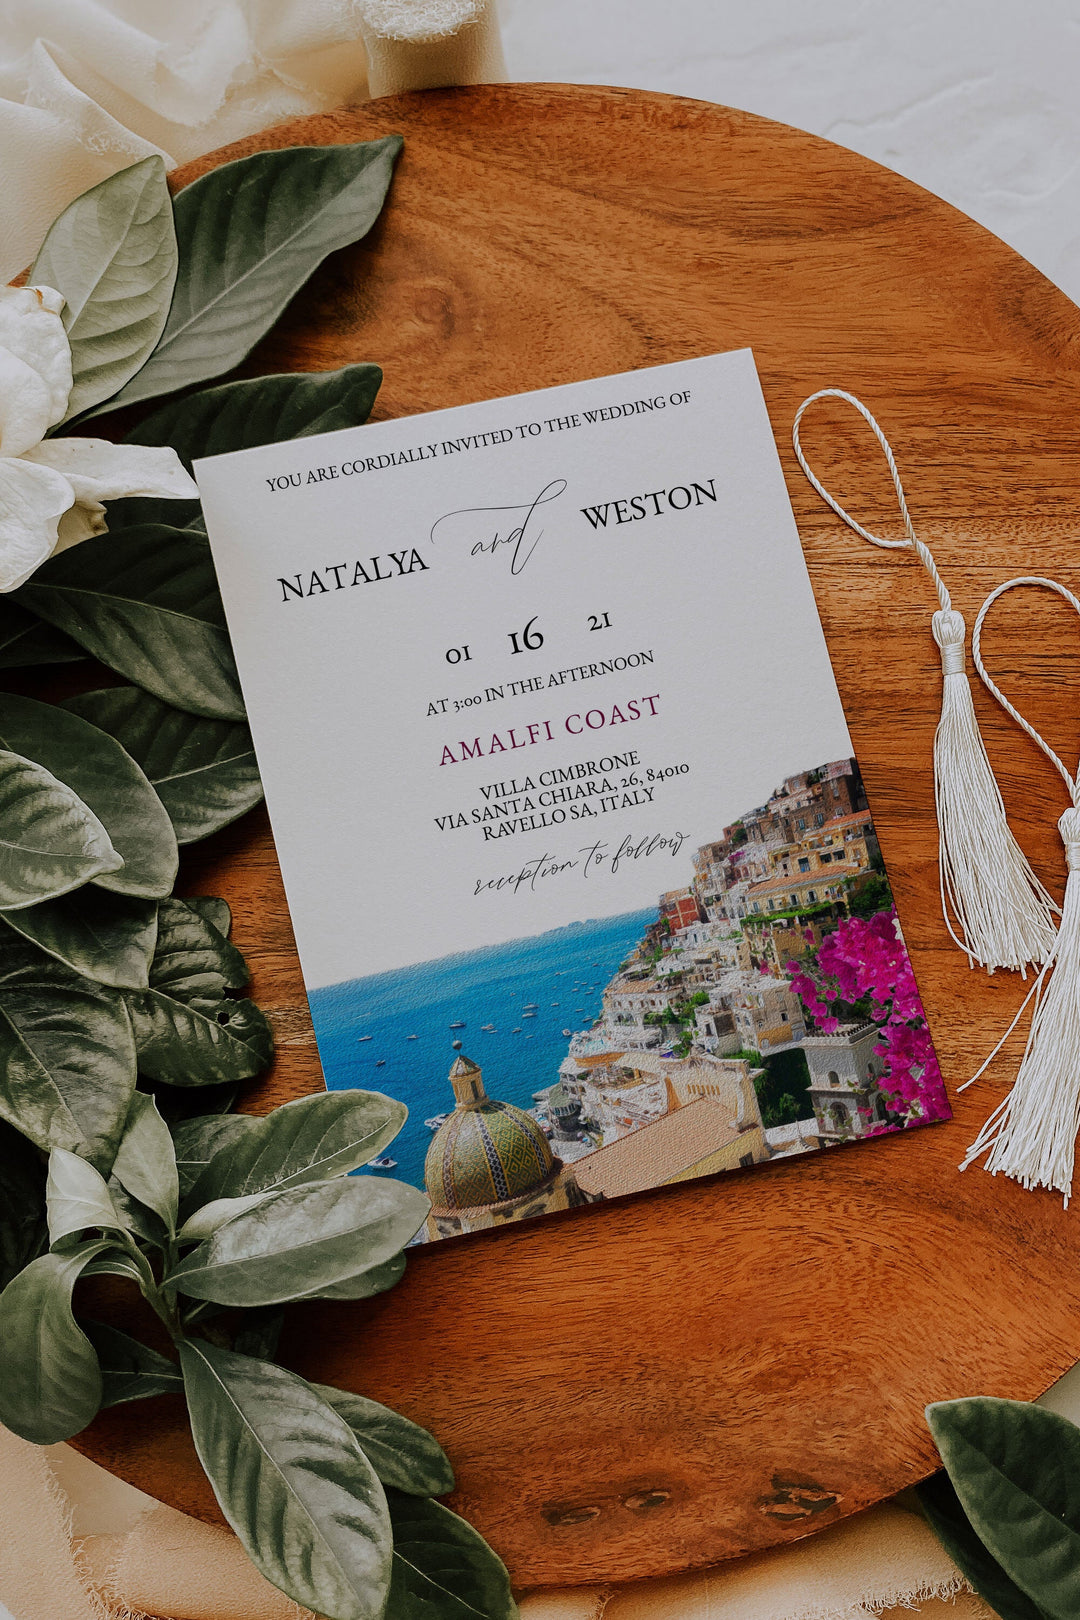 Amalfi Coast Wedding Invitation - Postiano Amalfi Coast Wedding Invitation - Italian Riviera Wedding Invitation - Ravello Italy Invitation